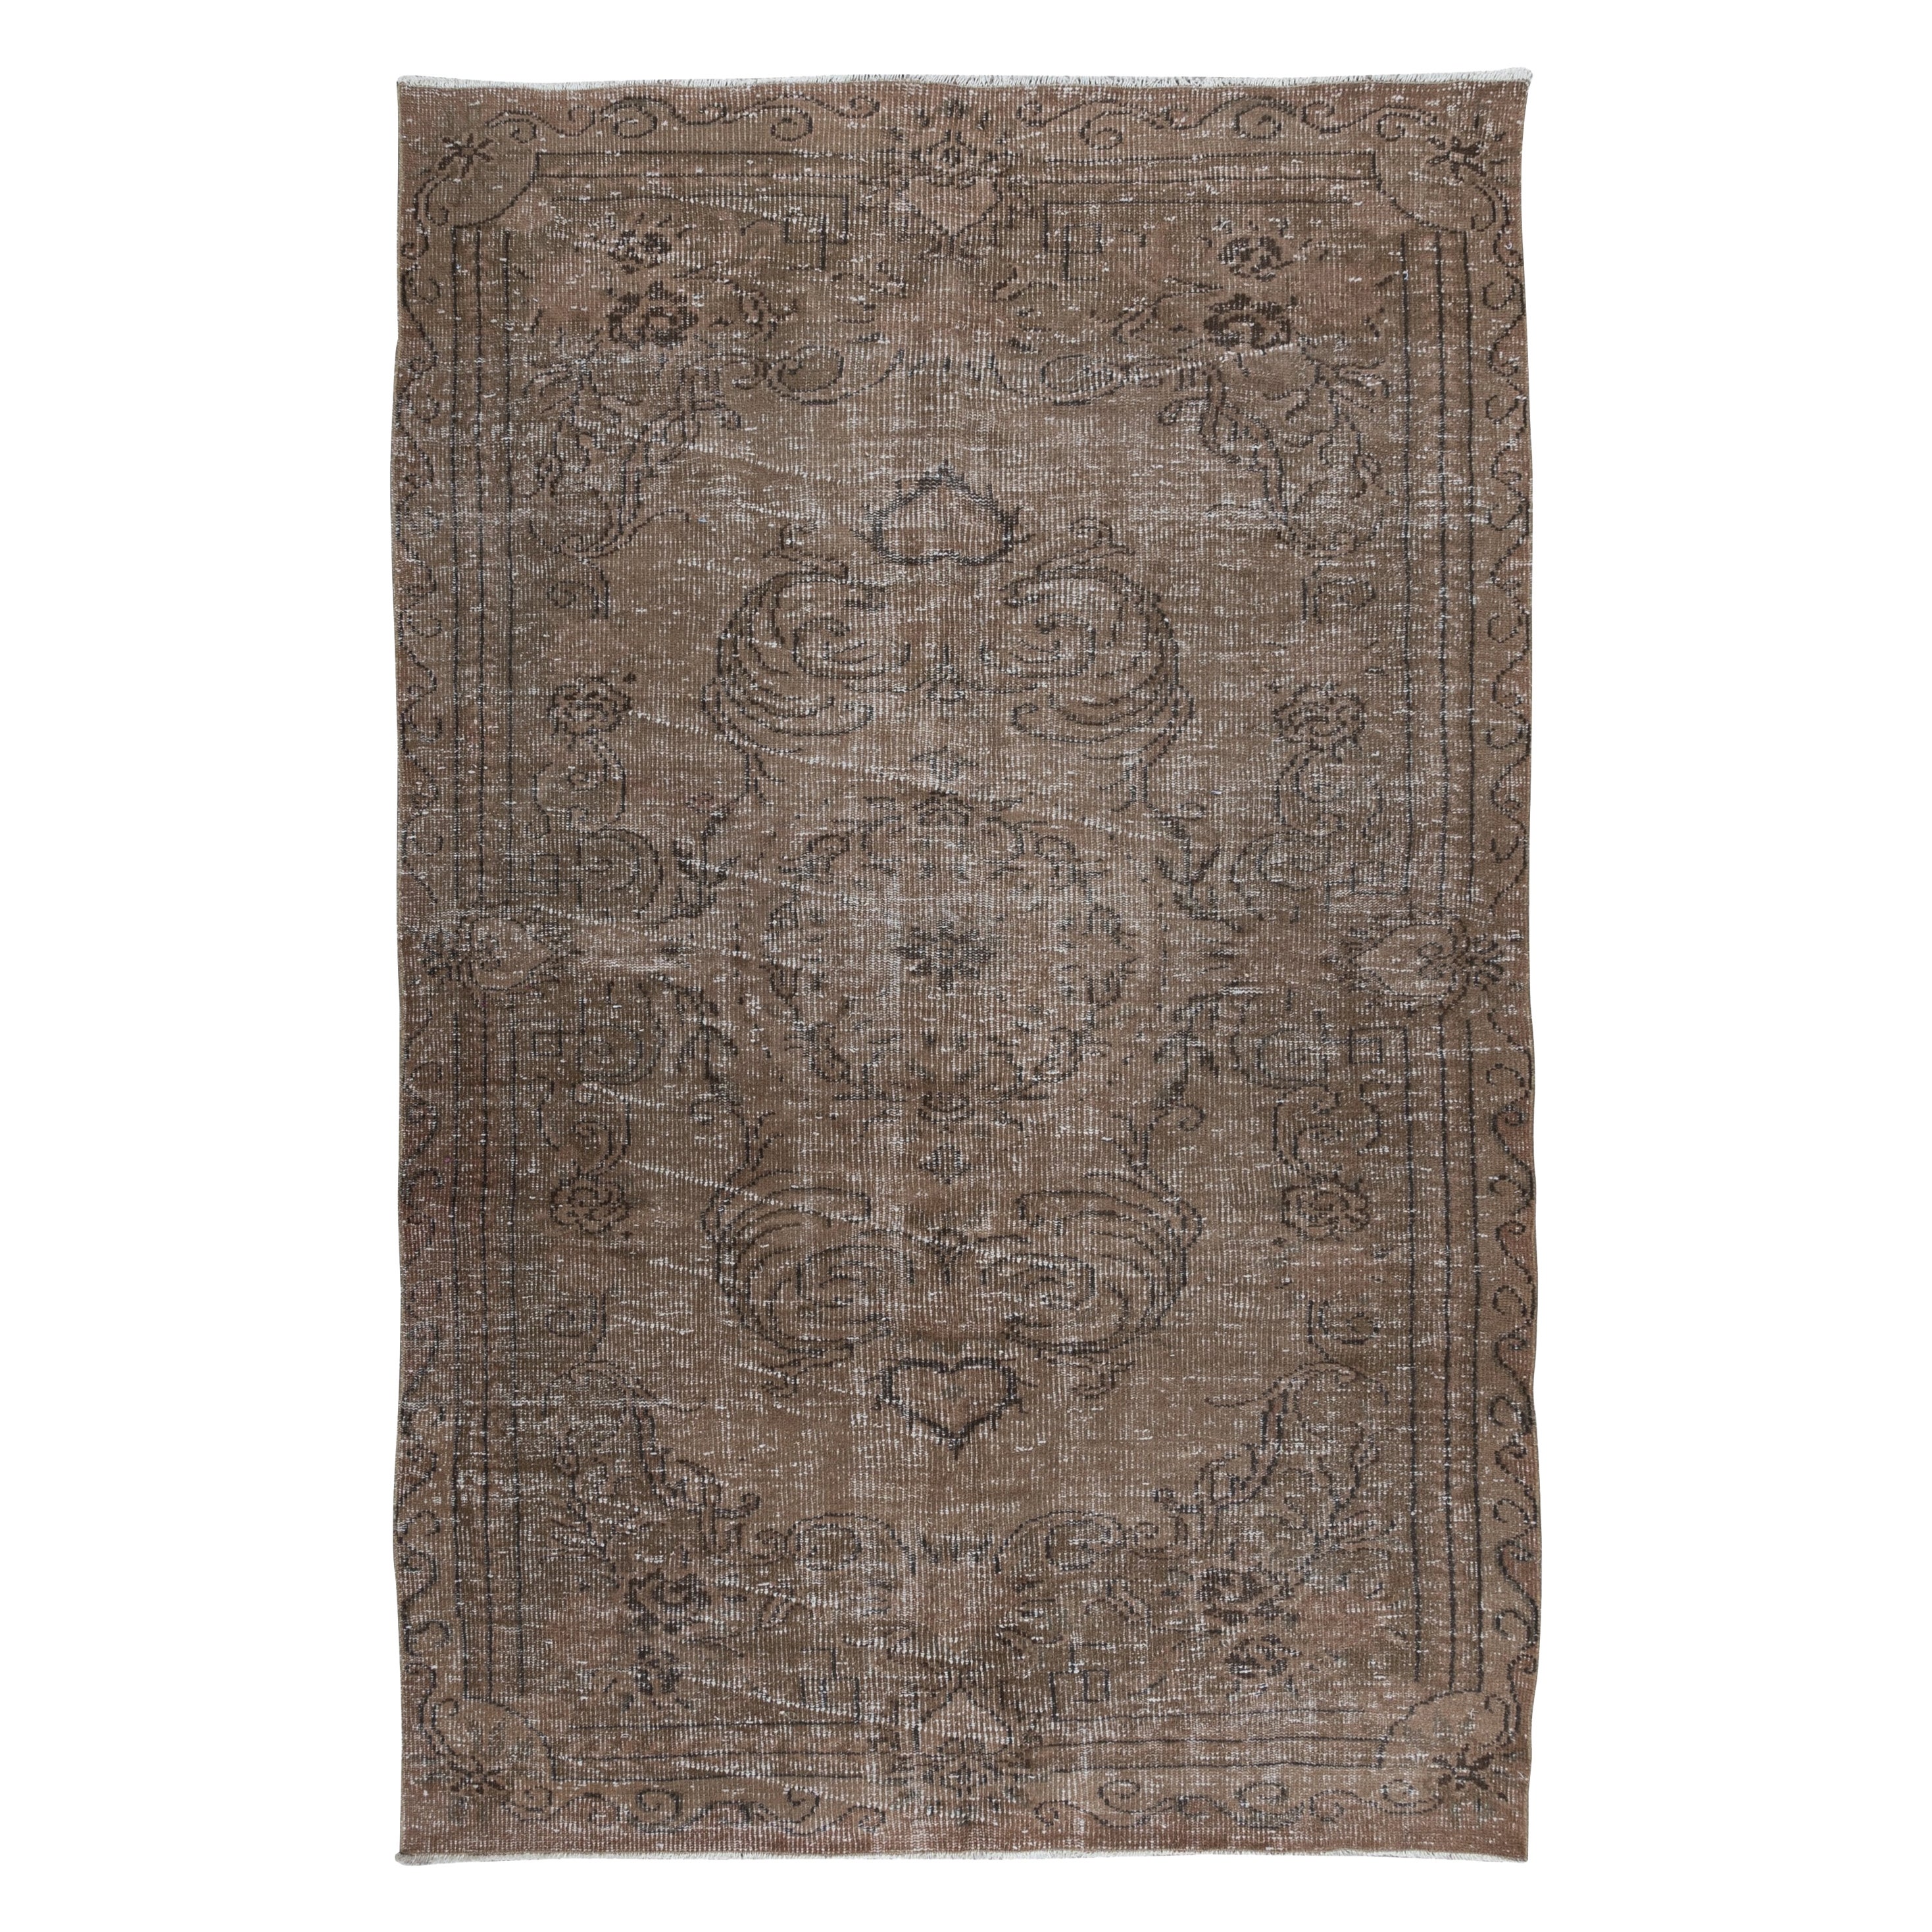 5.6x8.6 Ft Handmade Rug with Medallion Design in Brown, Vintage Turkish Carpet